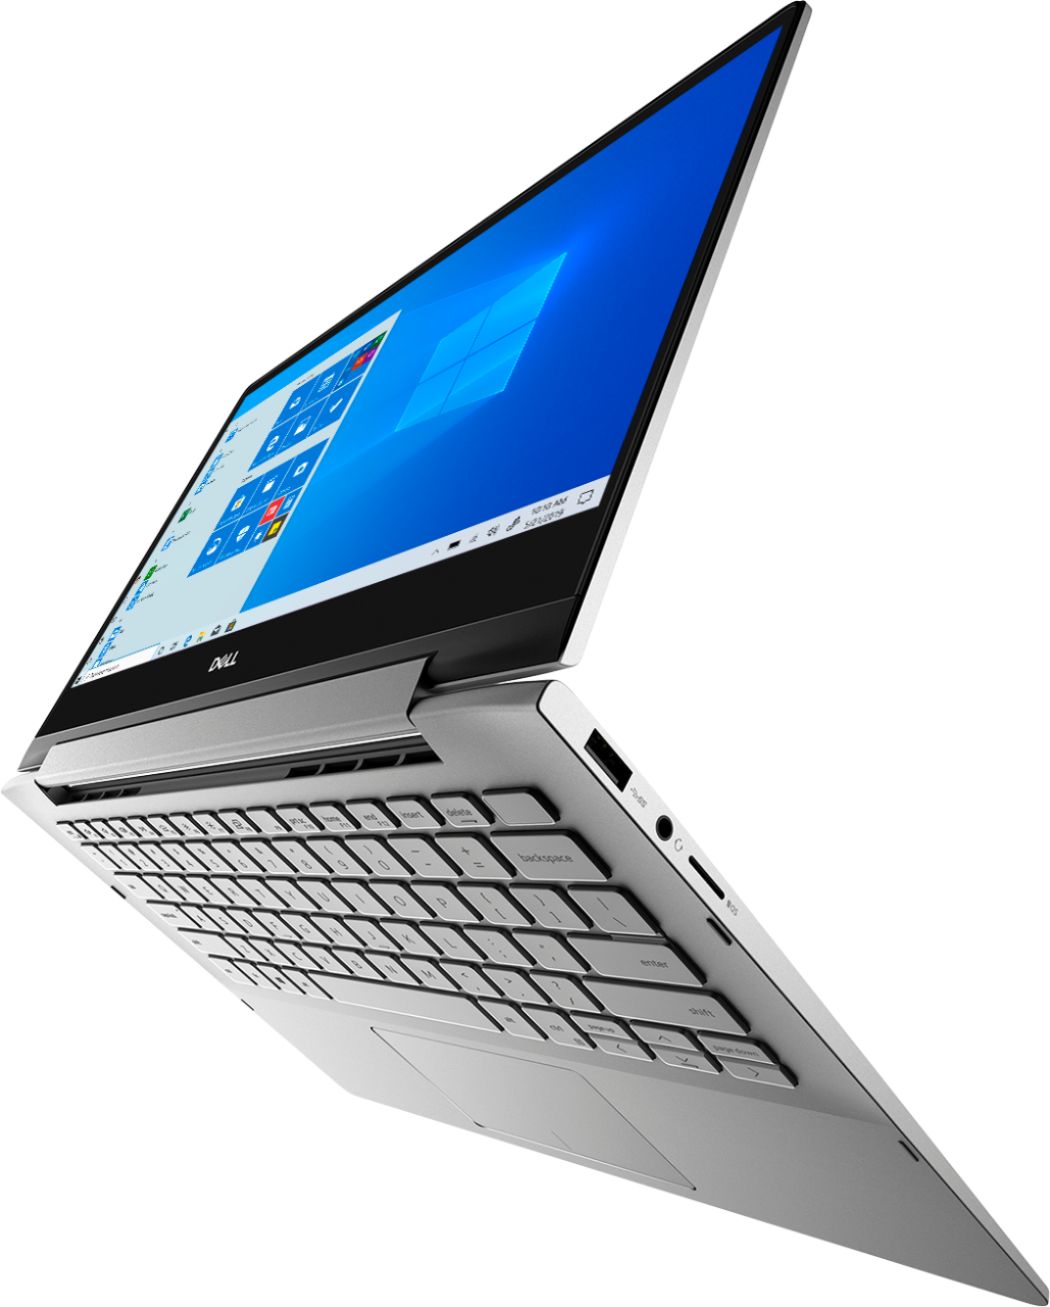 Dell - Inspiron 13.3 inch 7000 2-in-1 Touch-Screen Laptop - Intel Core i5 - 8GB Memory - 512GB SSD + 32GB Optane - Silver - 4.99